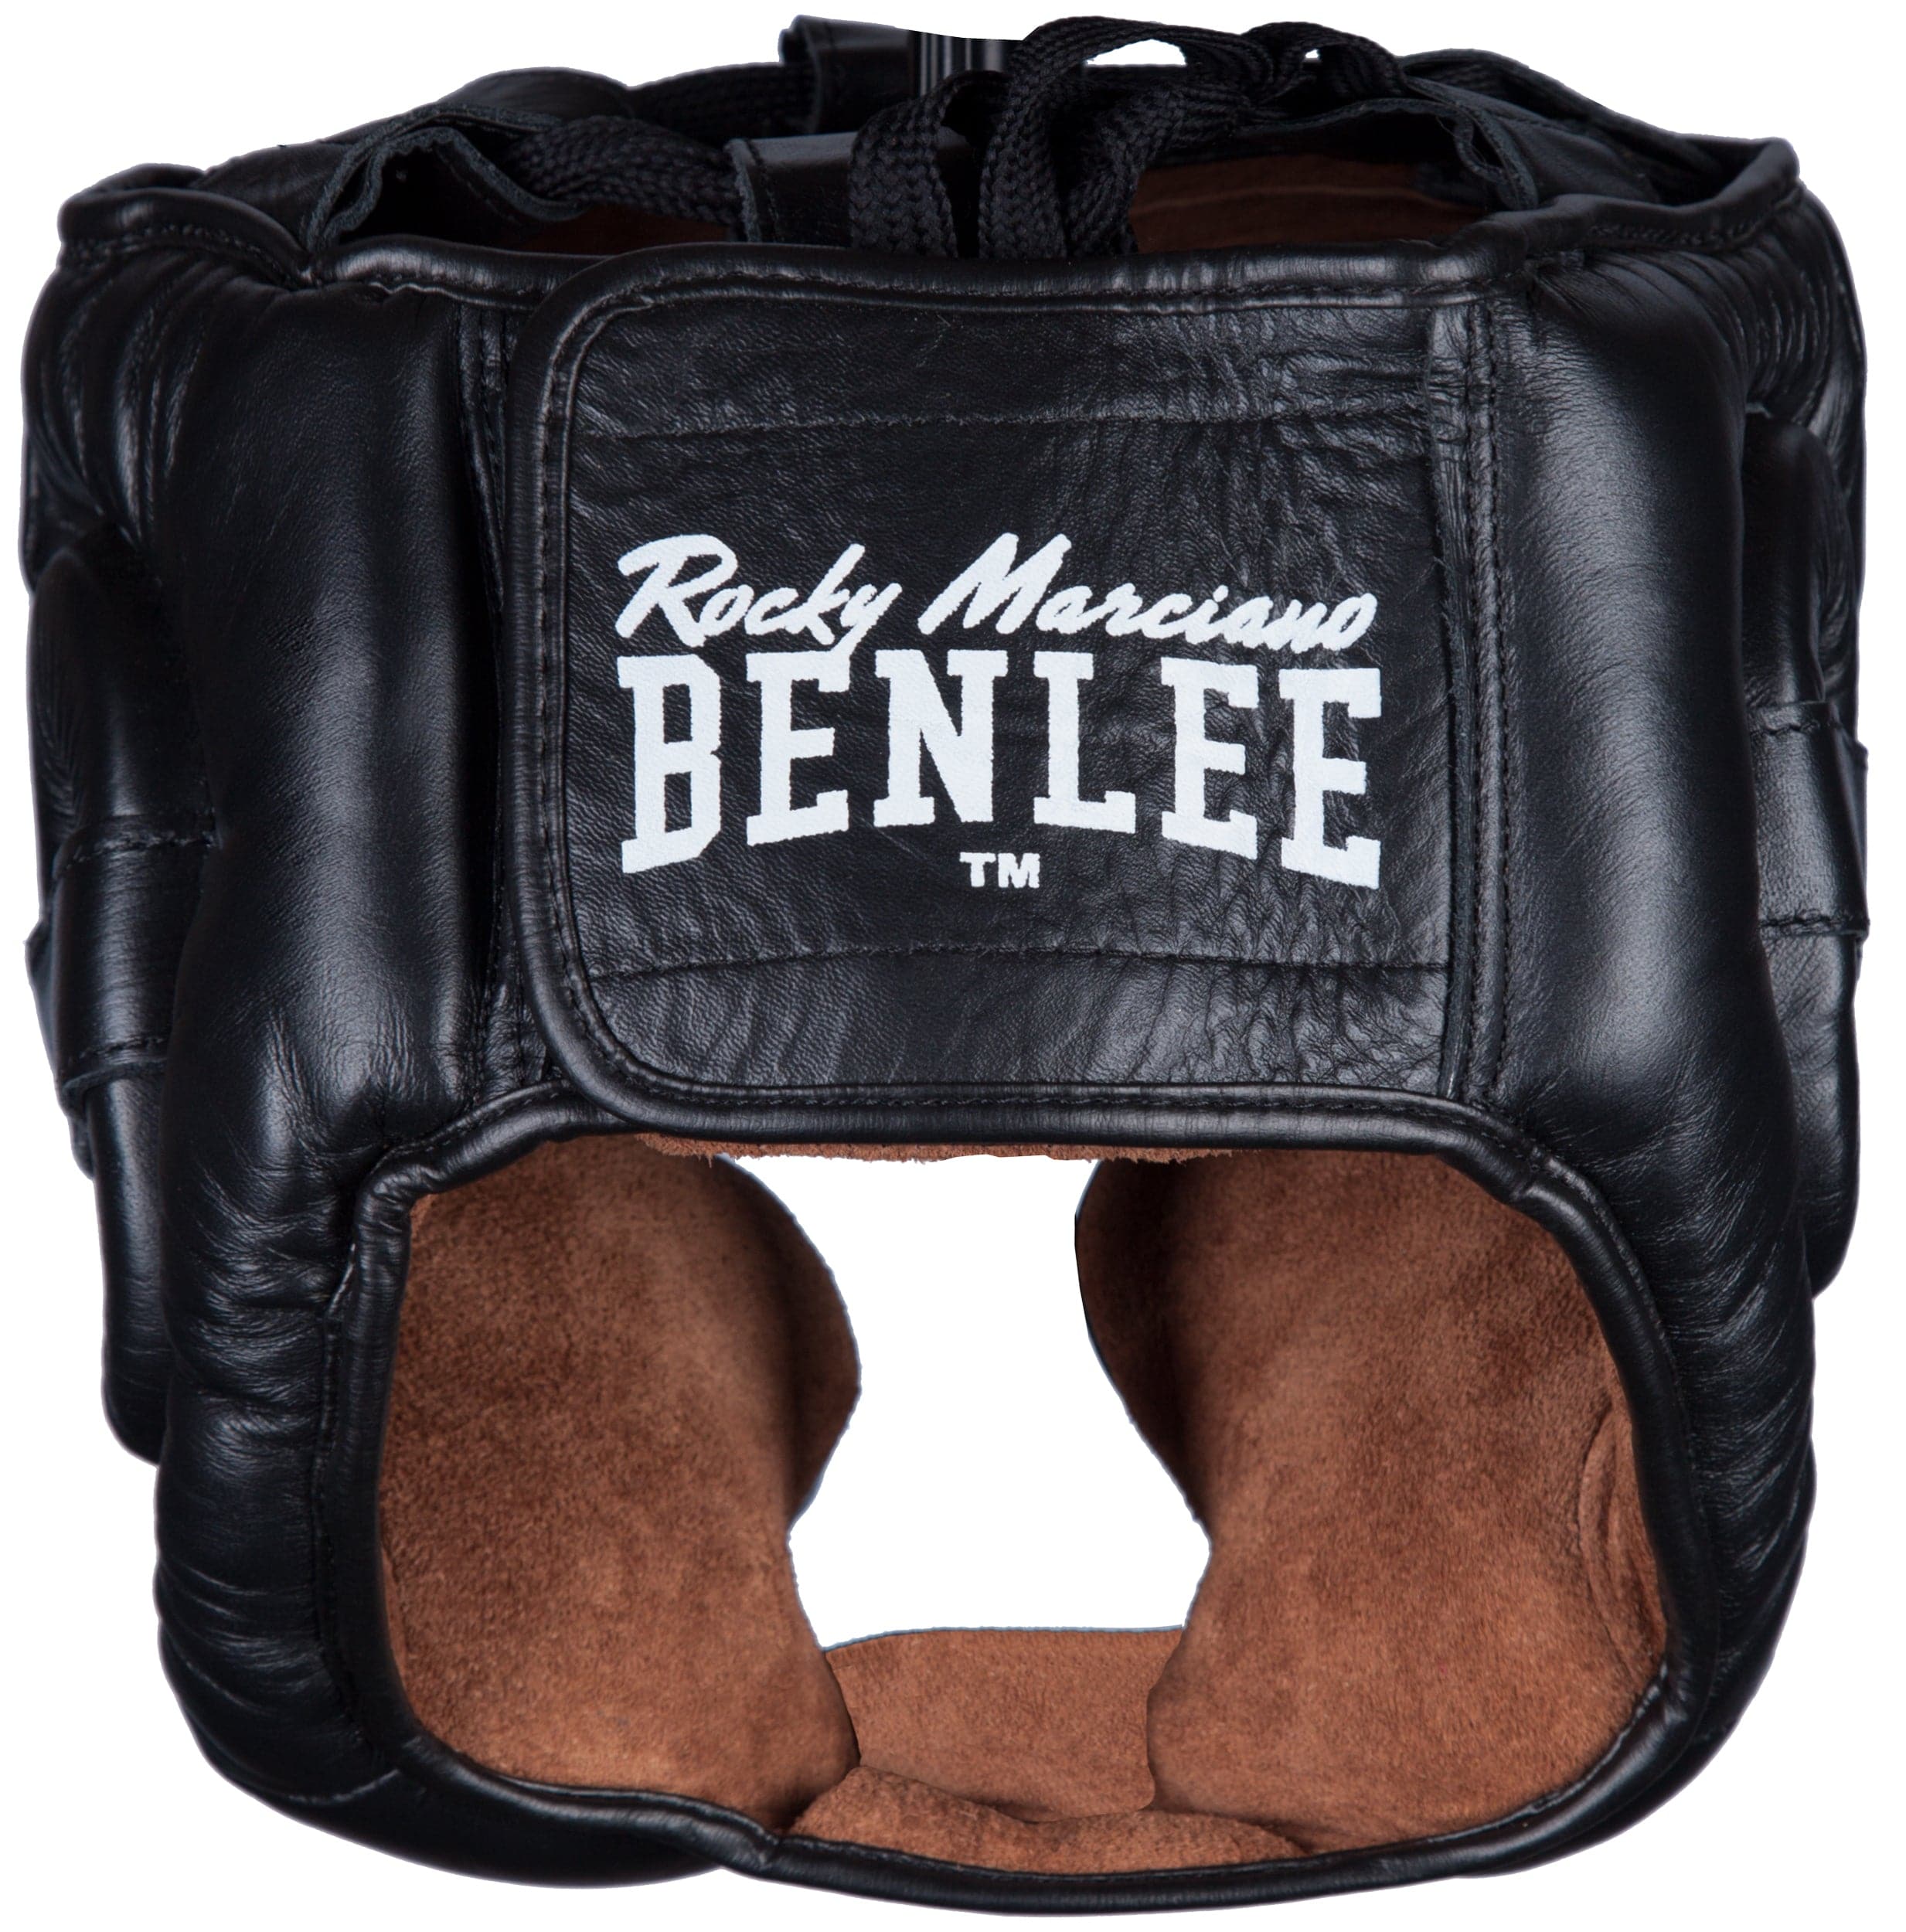 Benlee Boxing Helmet, Full Face Head Protection, 197016/1000, Black, L/XL - Athletix.ae